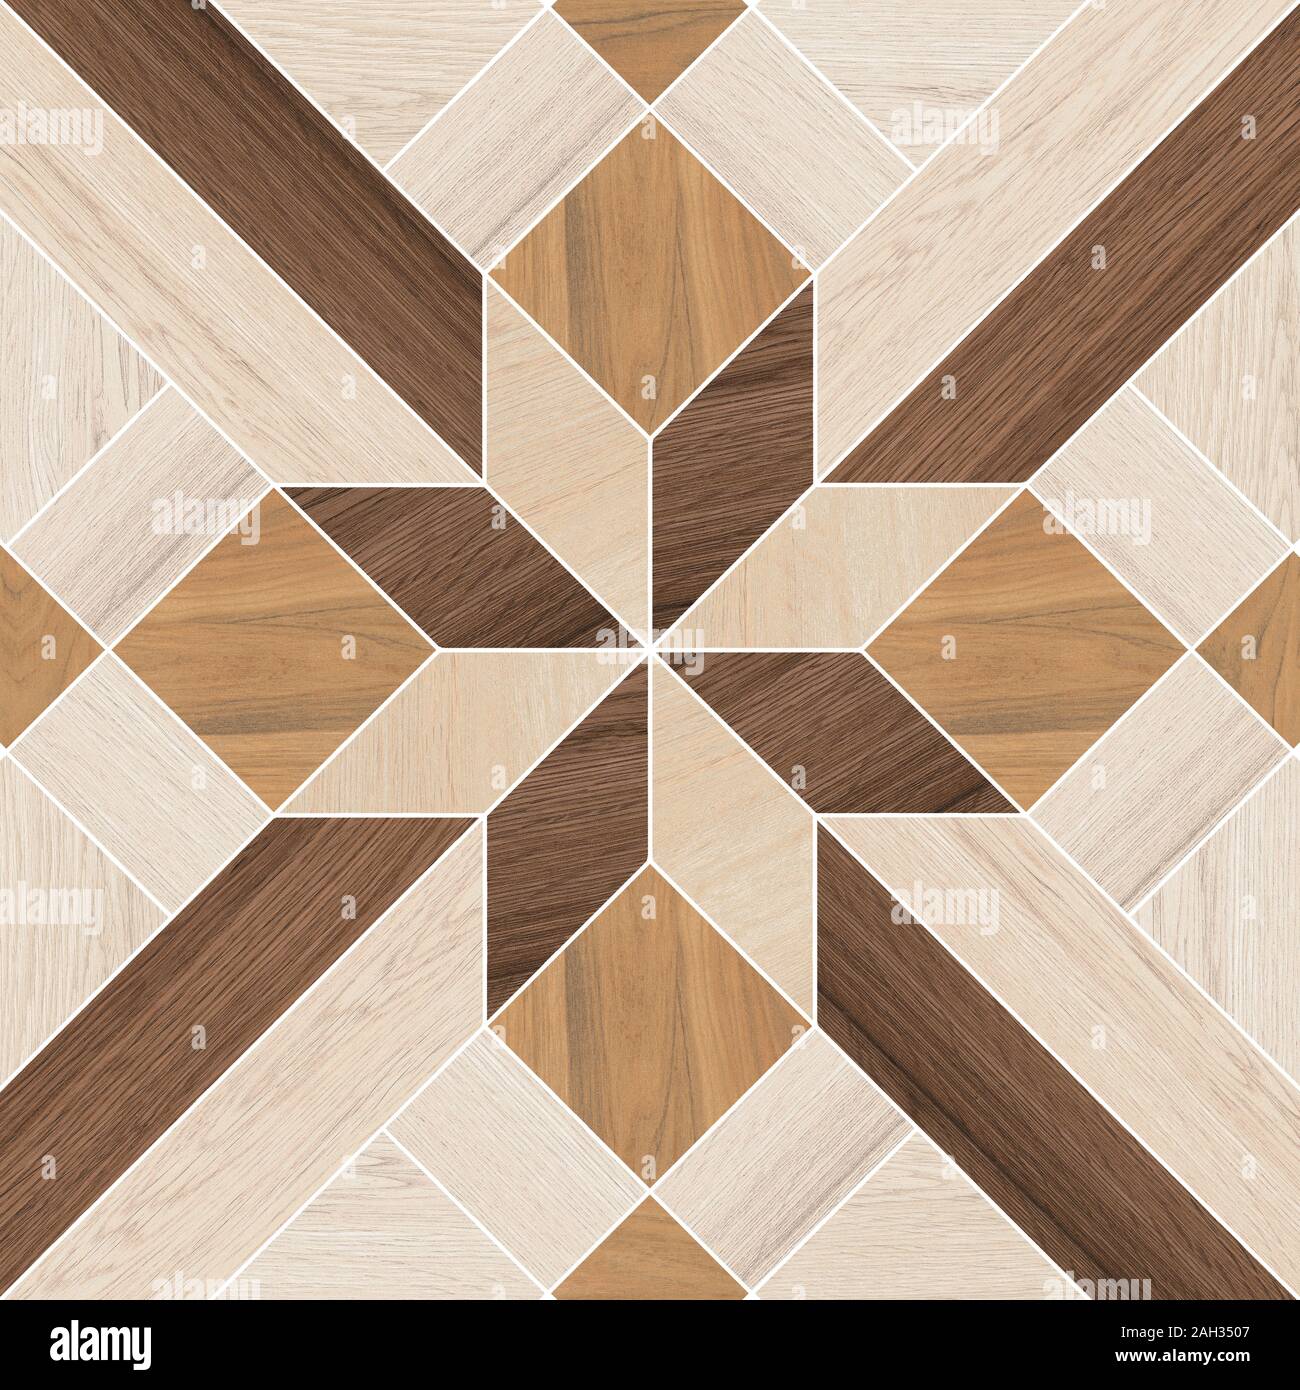 tiles, wooden geometric shapes, wooden floor tile Stock Photo - Alamy